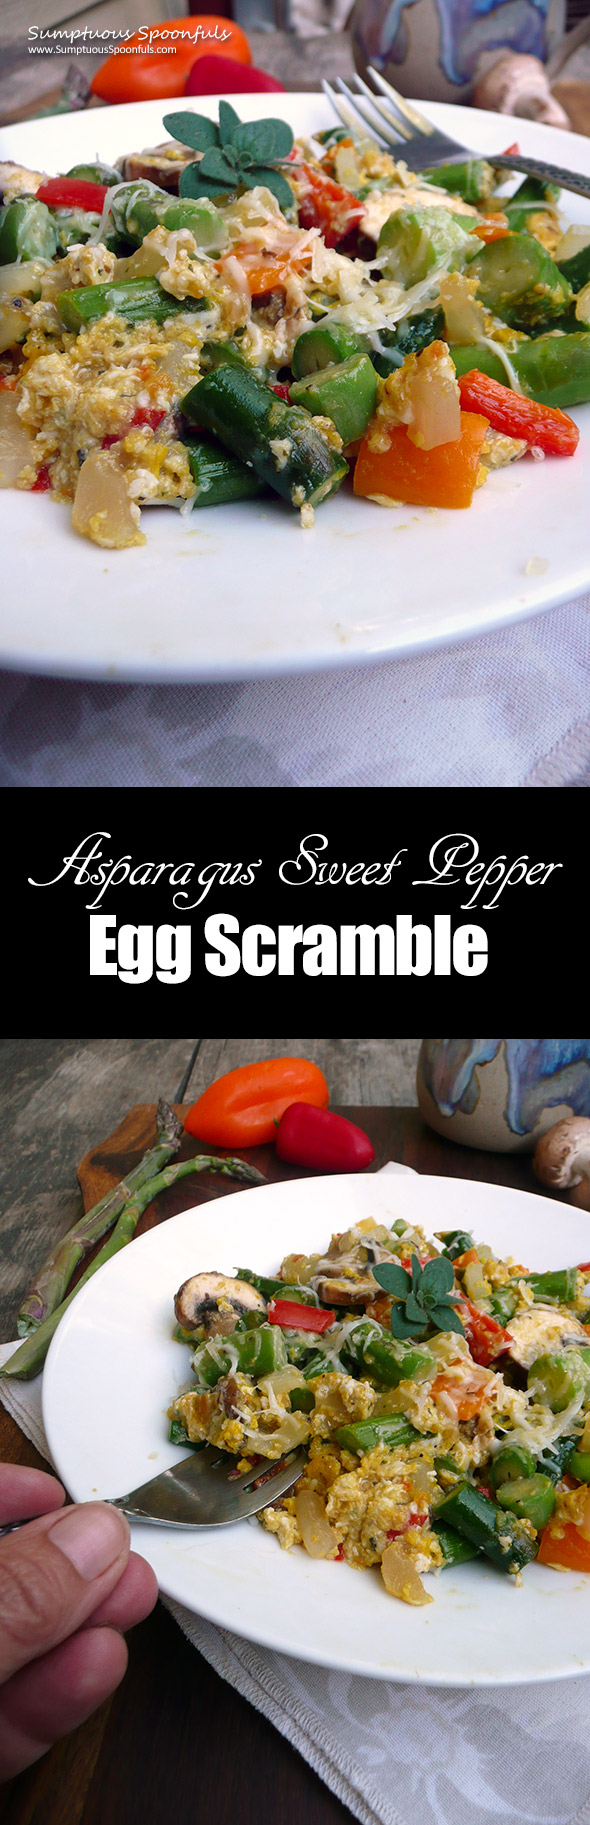 Asparagus Sweet Pepper Egg Scramble ~ Sumptuous Spoonfuls #breakfast #scramble #recipe